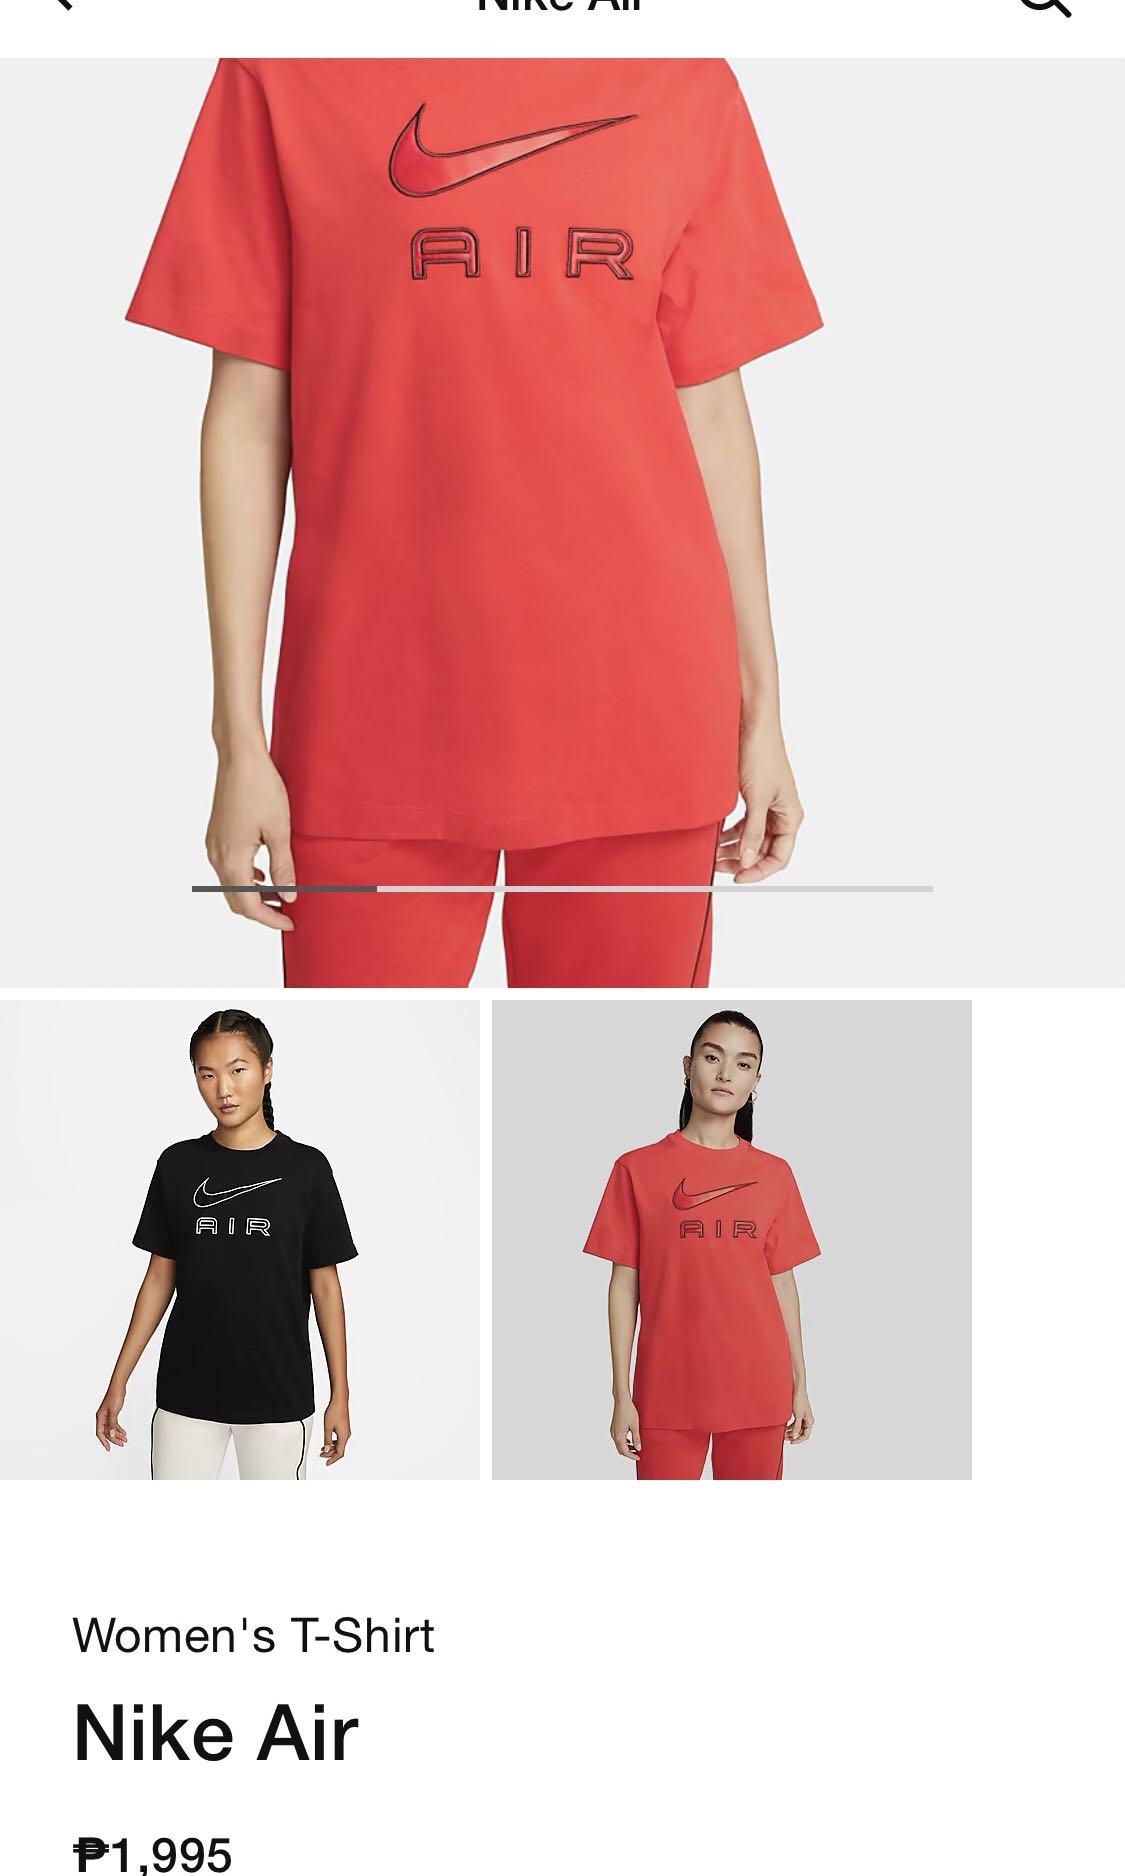 Nike Womens WMNS Dunk Low DJ9955 800 Orange/Black Patent Leather - Size 6.5W